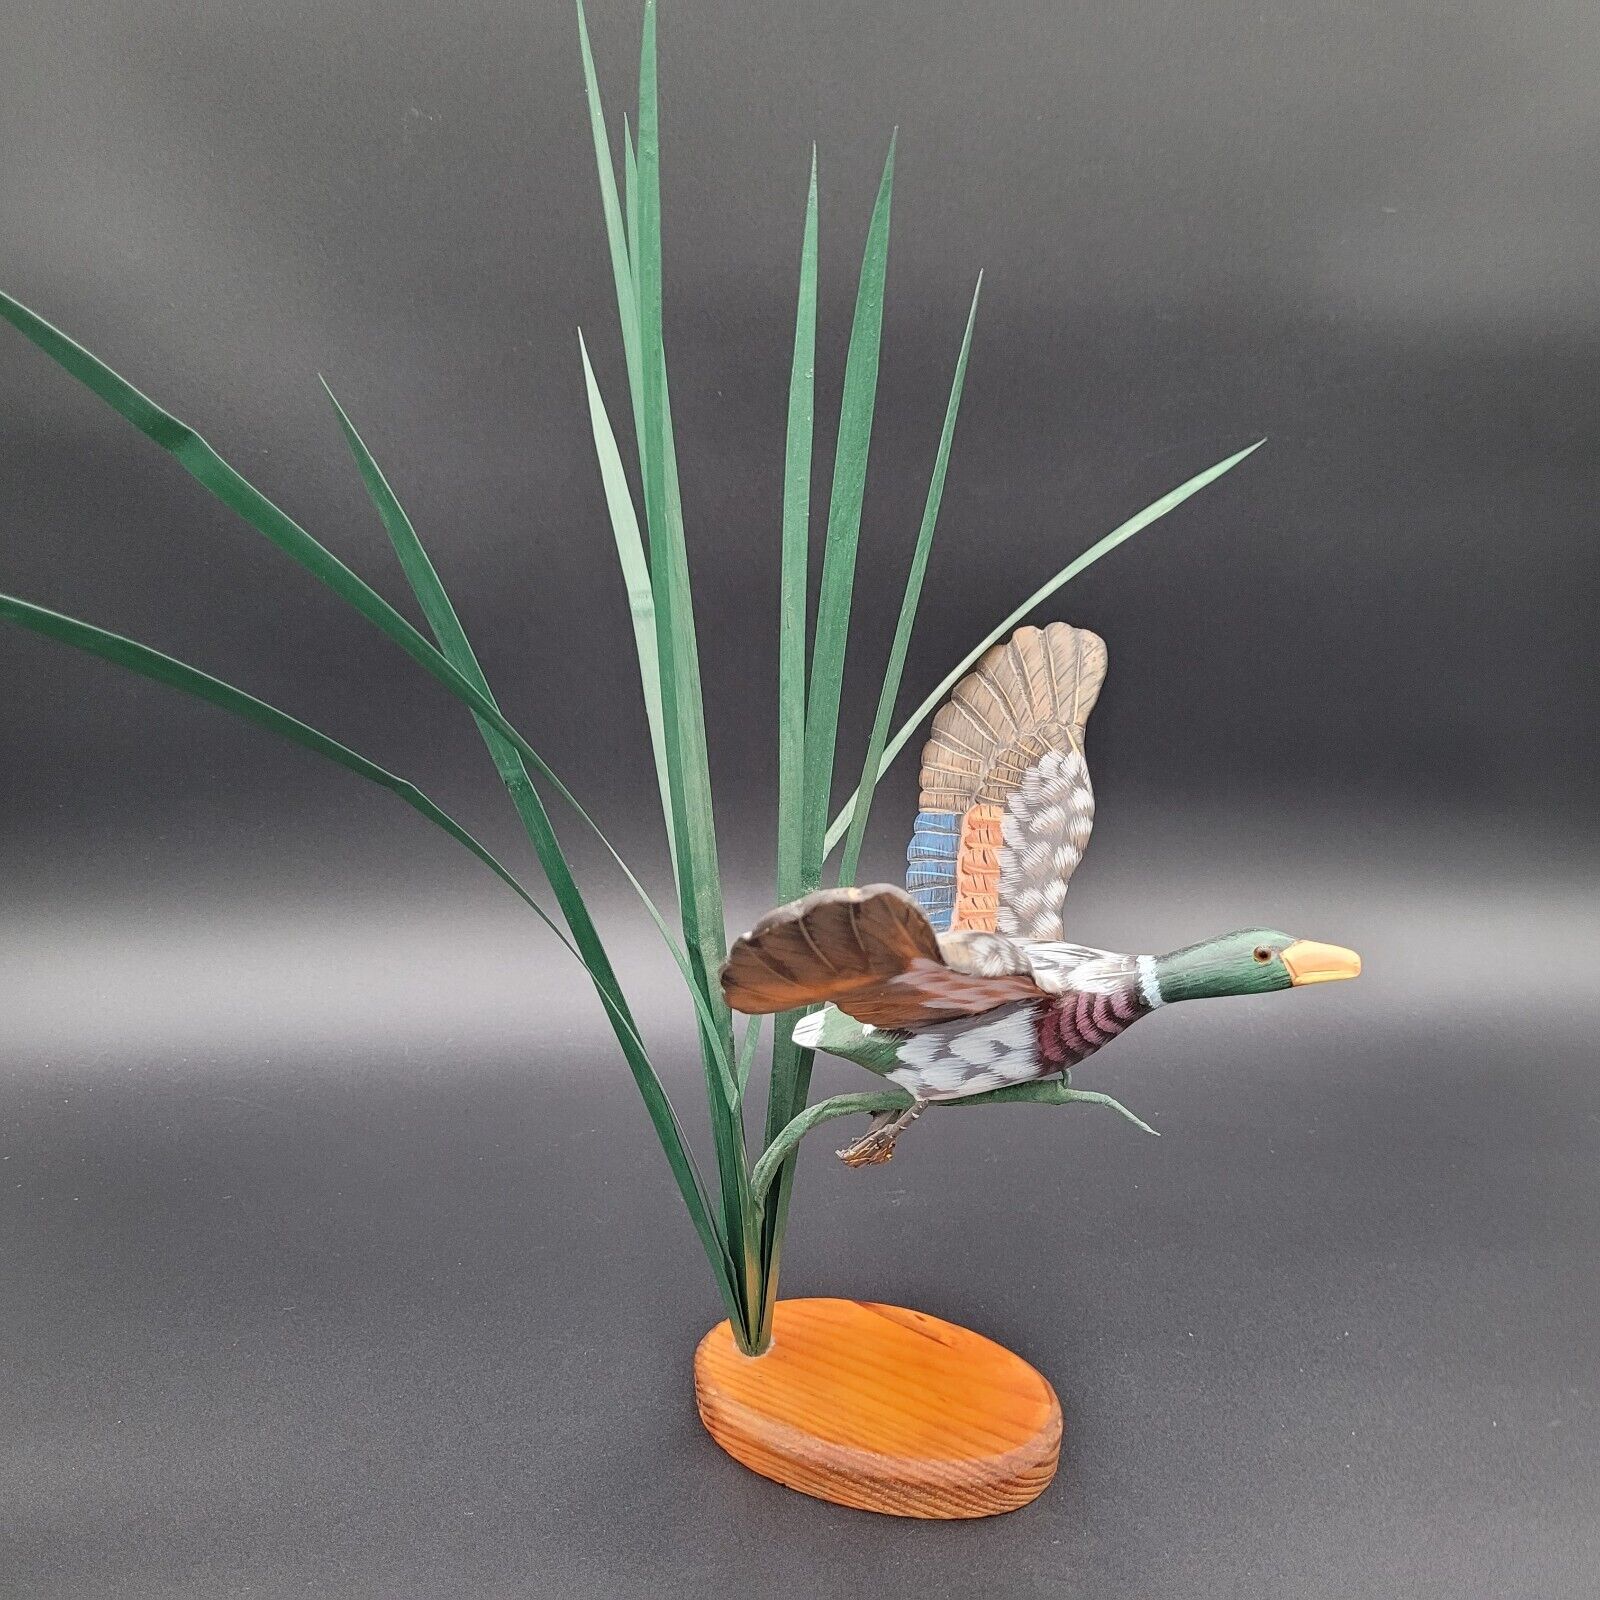 Vintage Wooden Flying Mallard Duck Decoy Reeds Grass Sculpture On Wooden Base